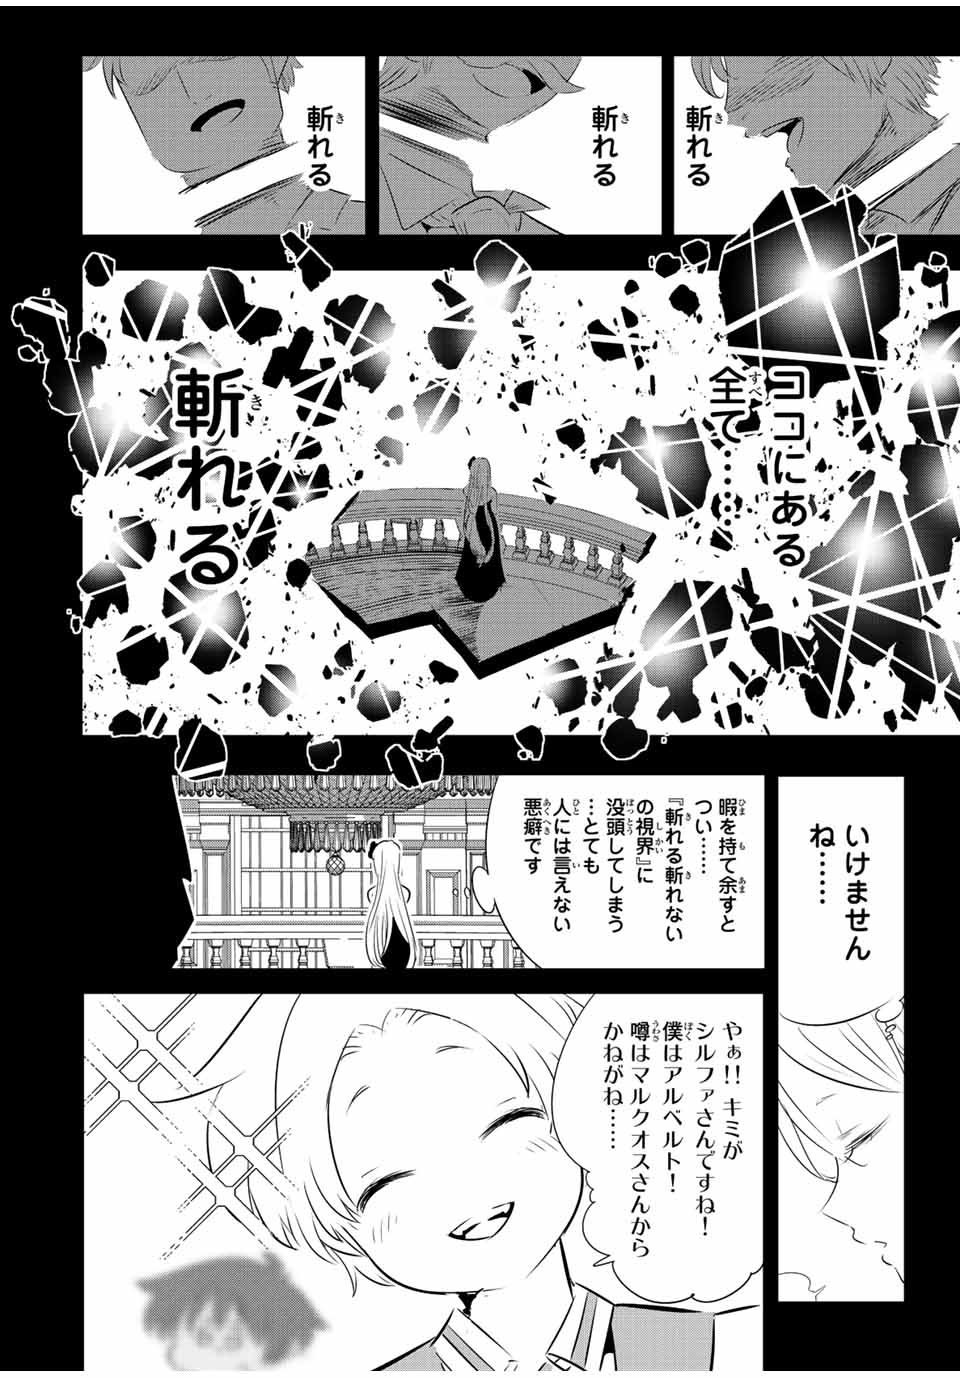 Tensei Shitara Slime Datta Ken - Tensei Shitara Slime Manga Chapter 98  RAW!! #tensura #slimemanga